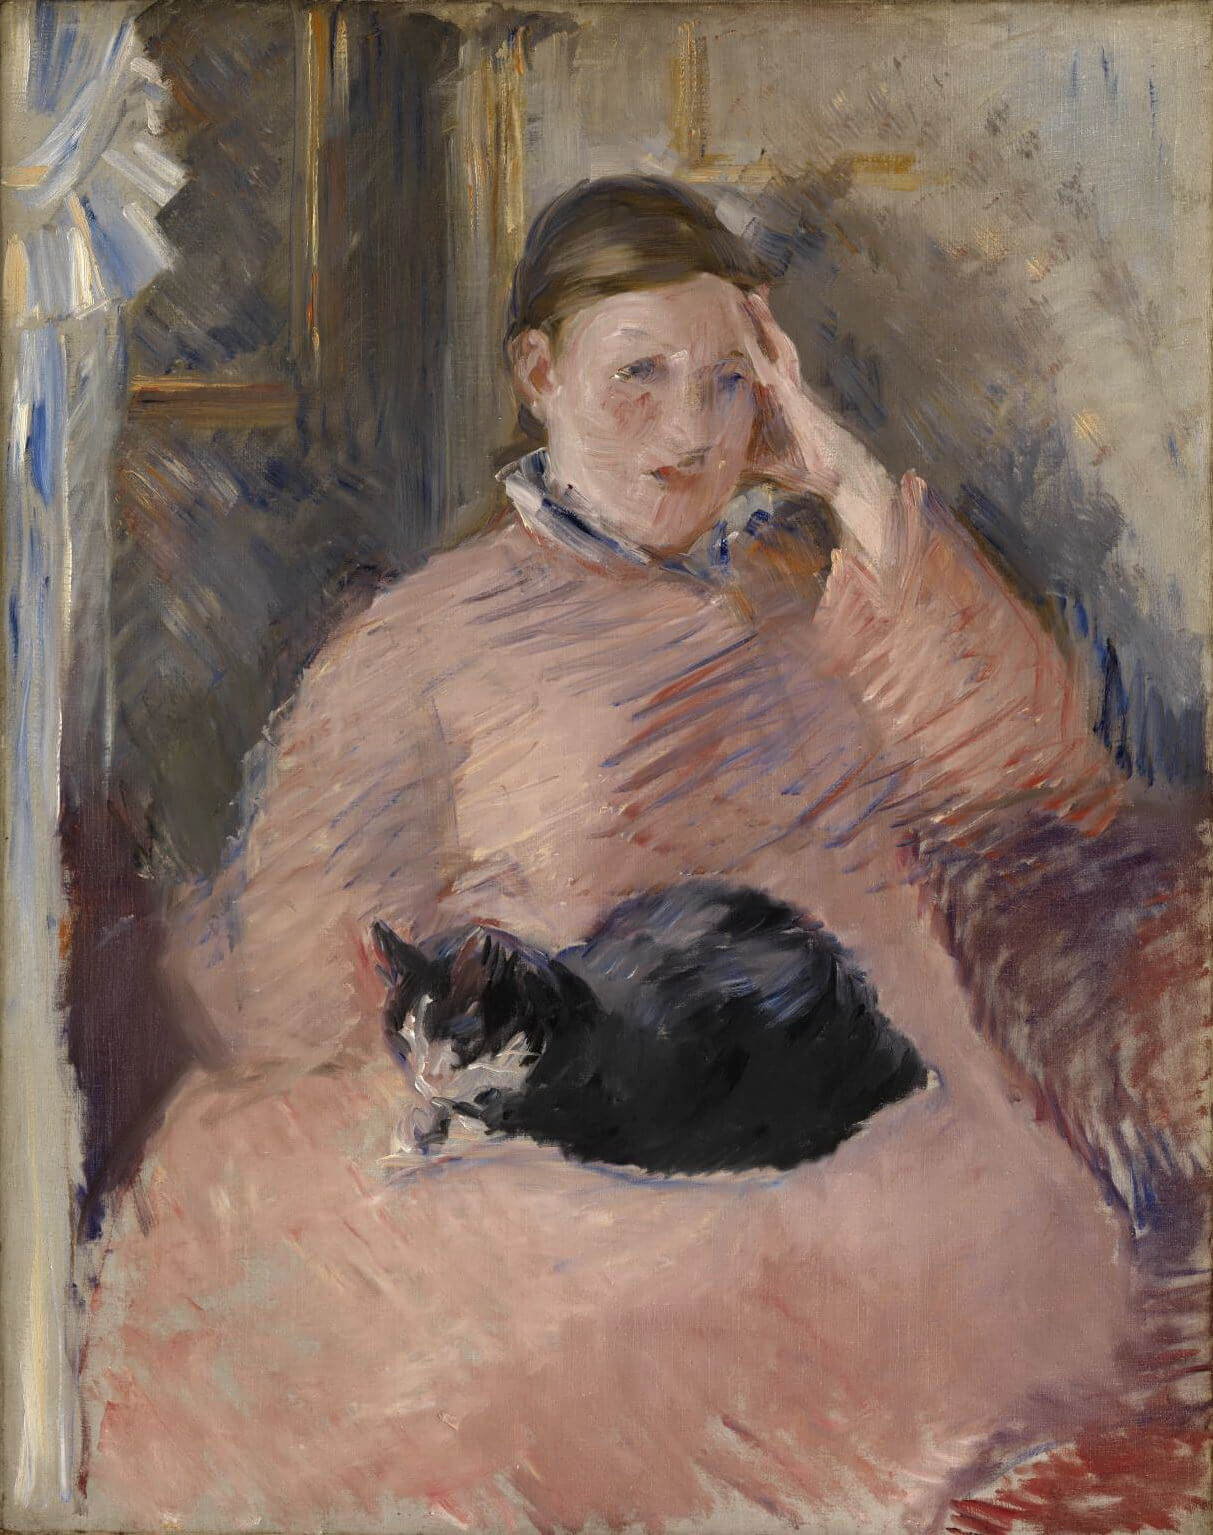 Эдуард Мане. "Женщина с кошкой (Портрет мадам Мане)". Около 1880. Галерея Тейт, Лондон.